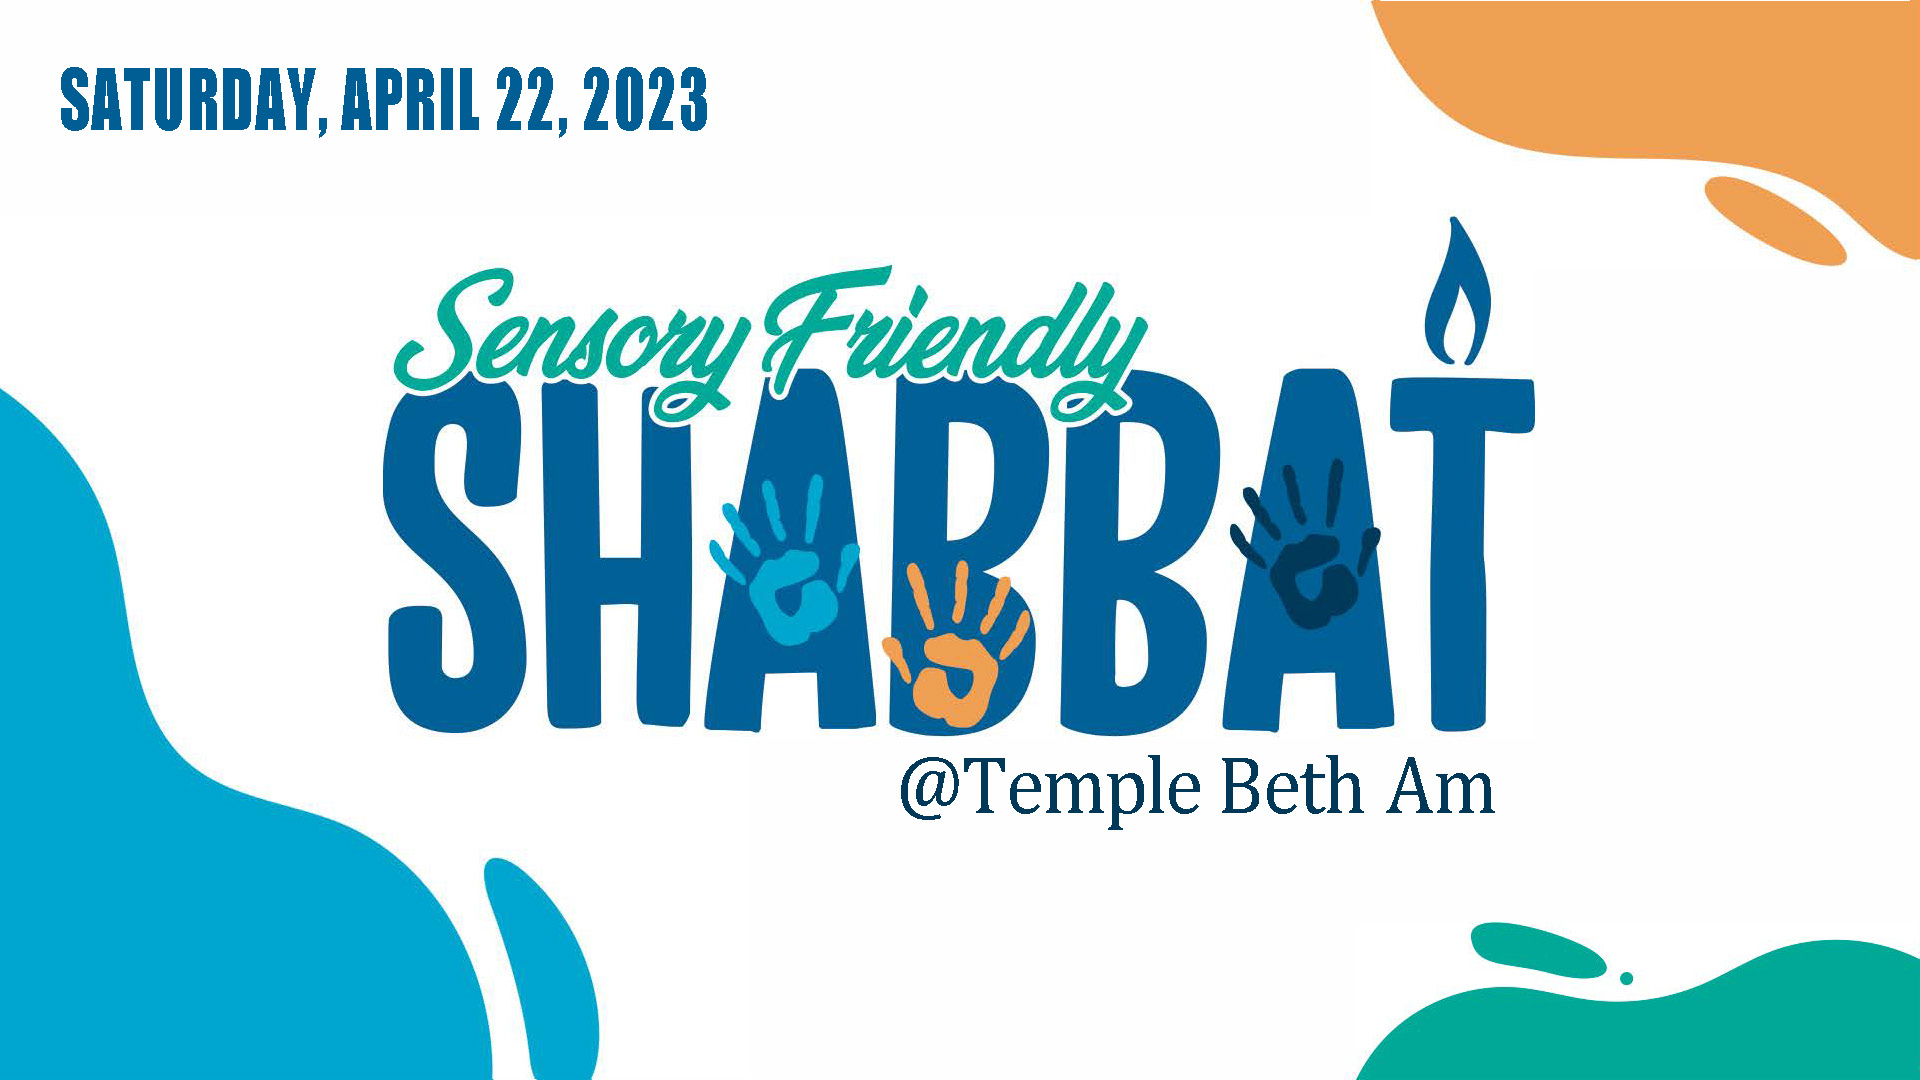 Sensory Friendly Shabbat Flyer, Saturday, April 22, Sensory Friendly Shabbat @ Temple Beth Am.